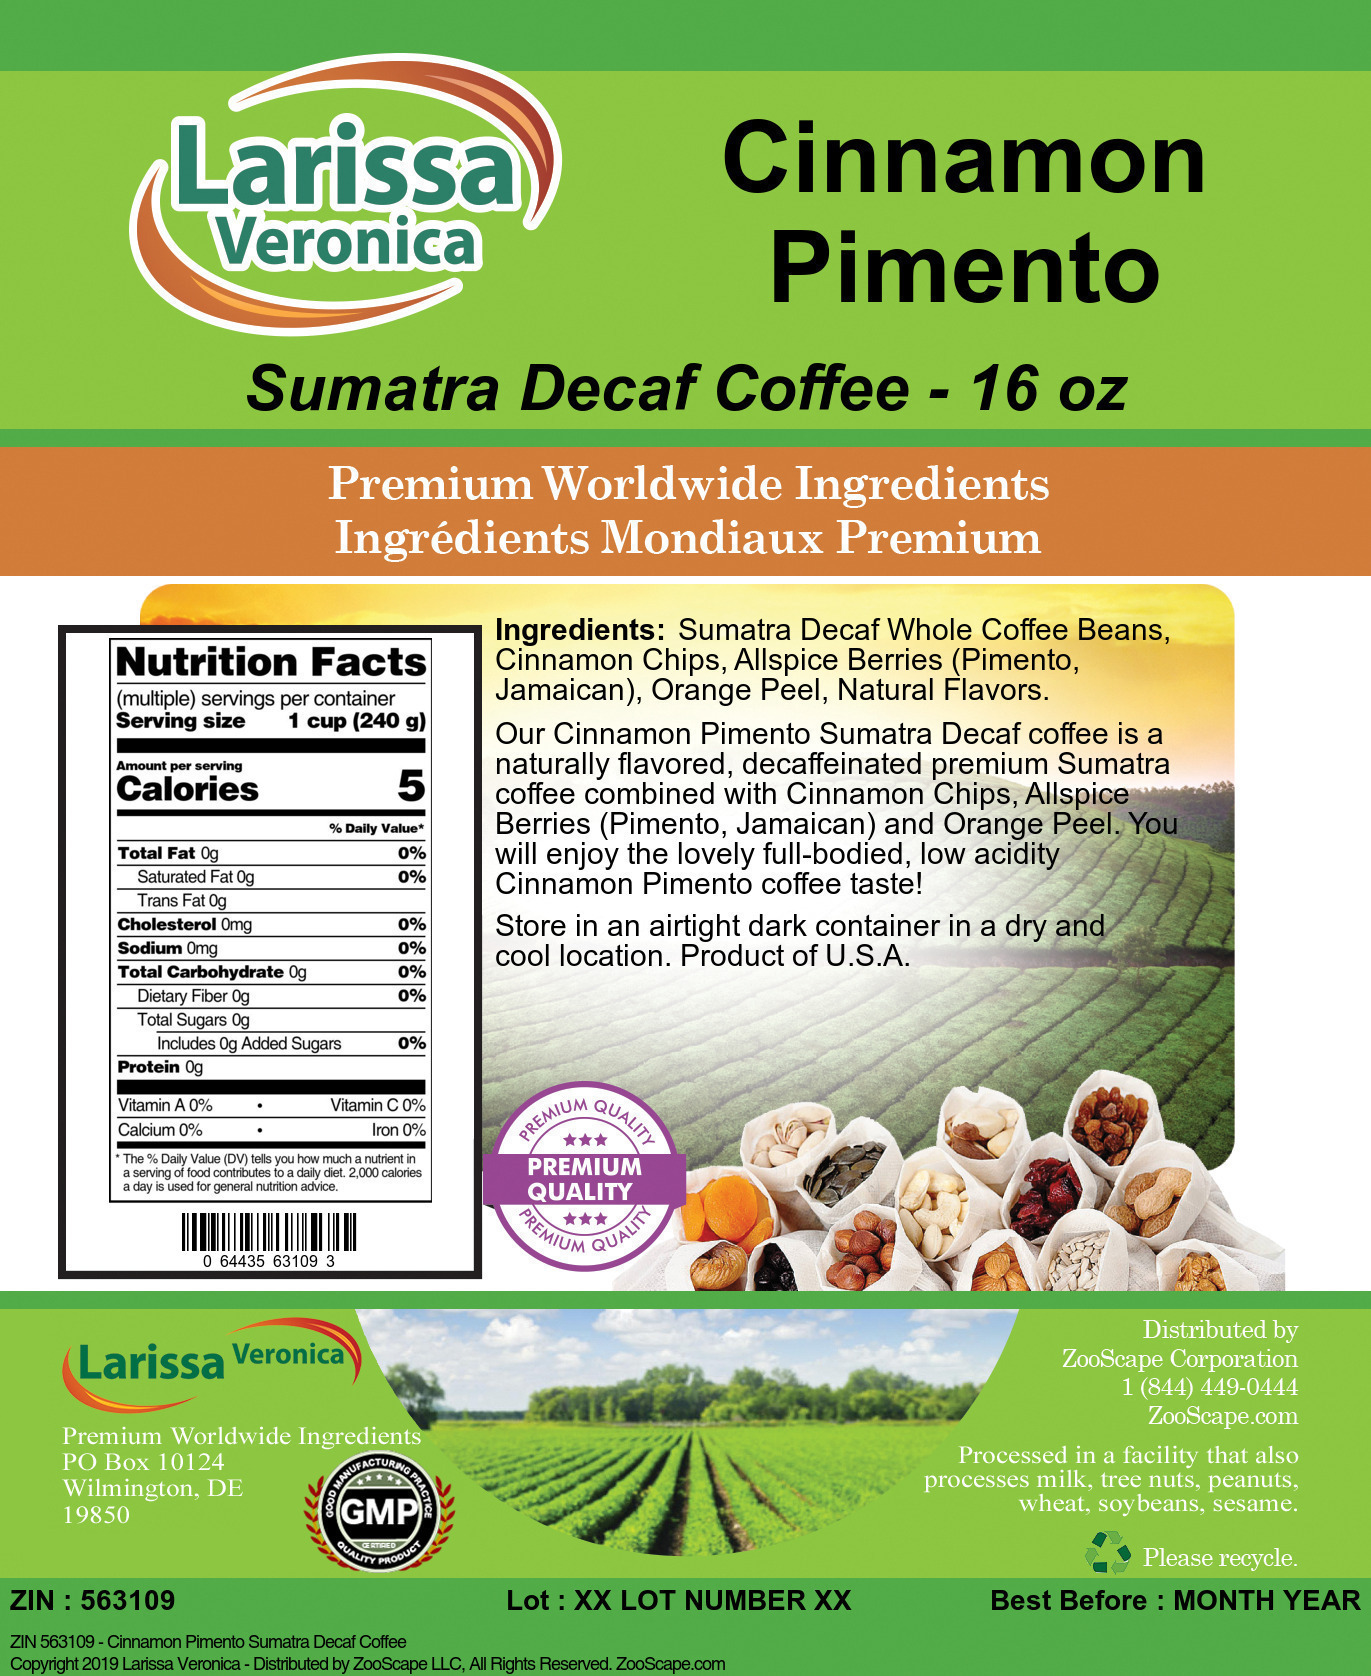 Cinnamon Pimento Sumatra Decaf Coffee - Label